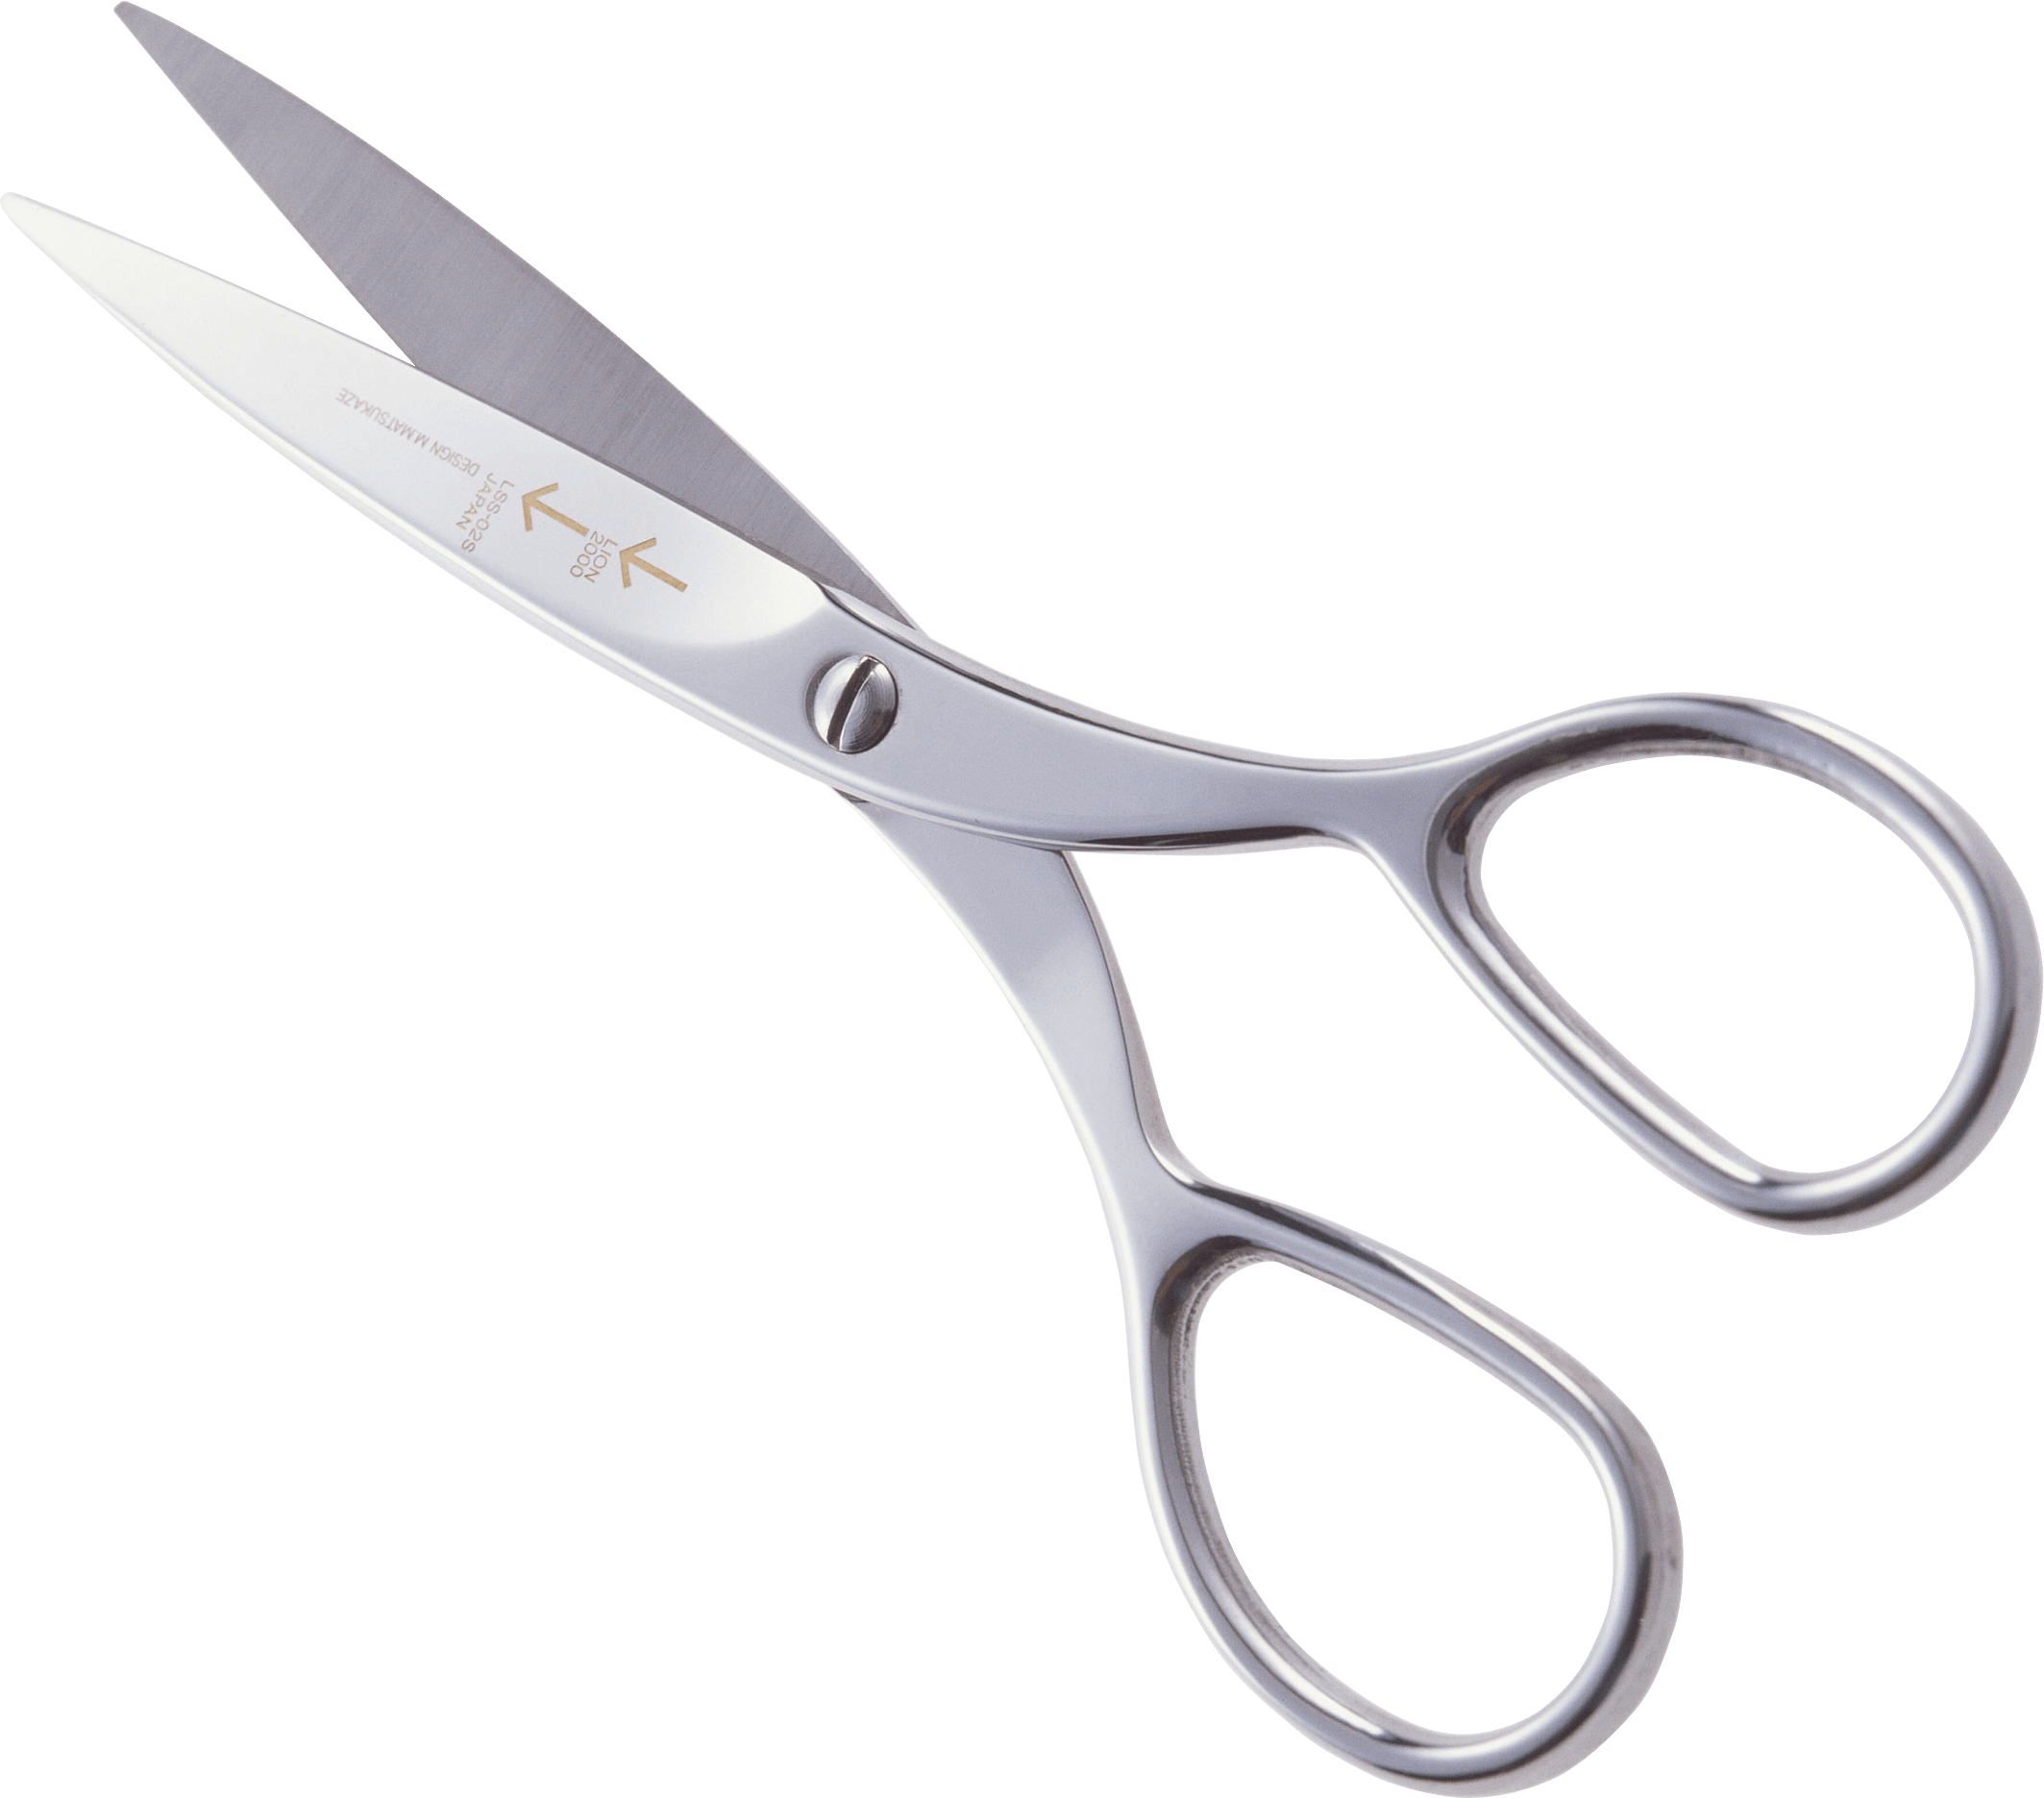 Hair Scissors Png Image PNG Image